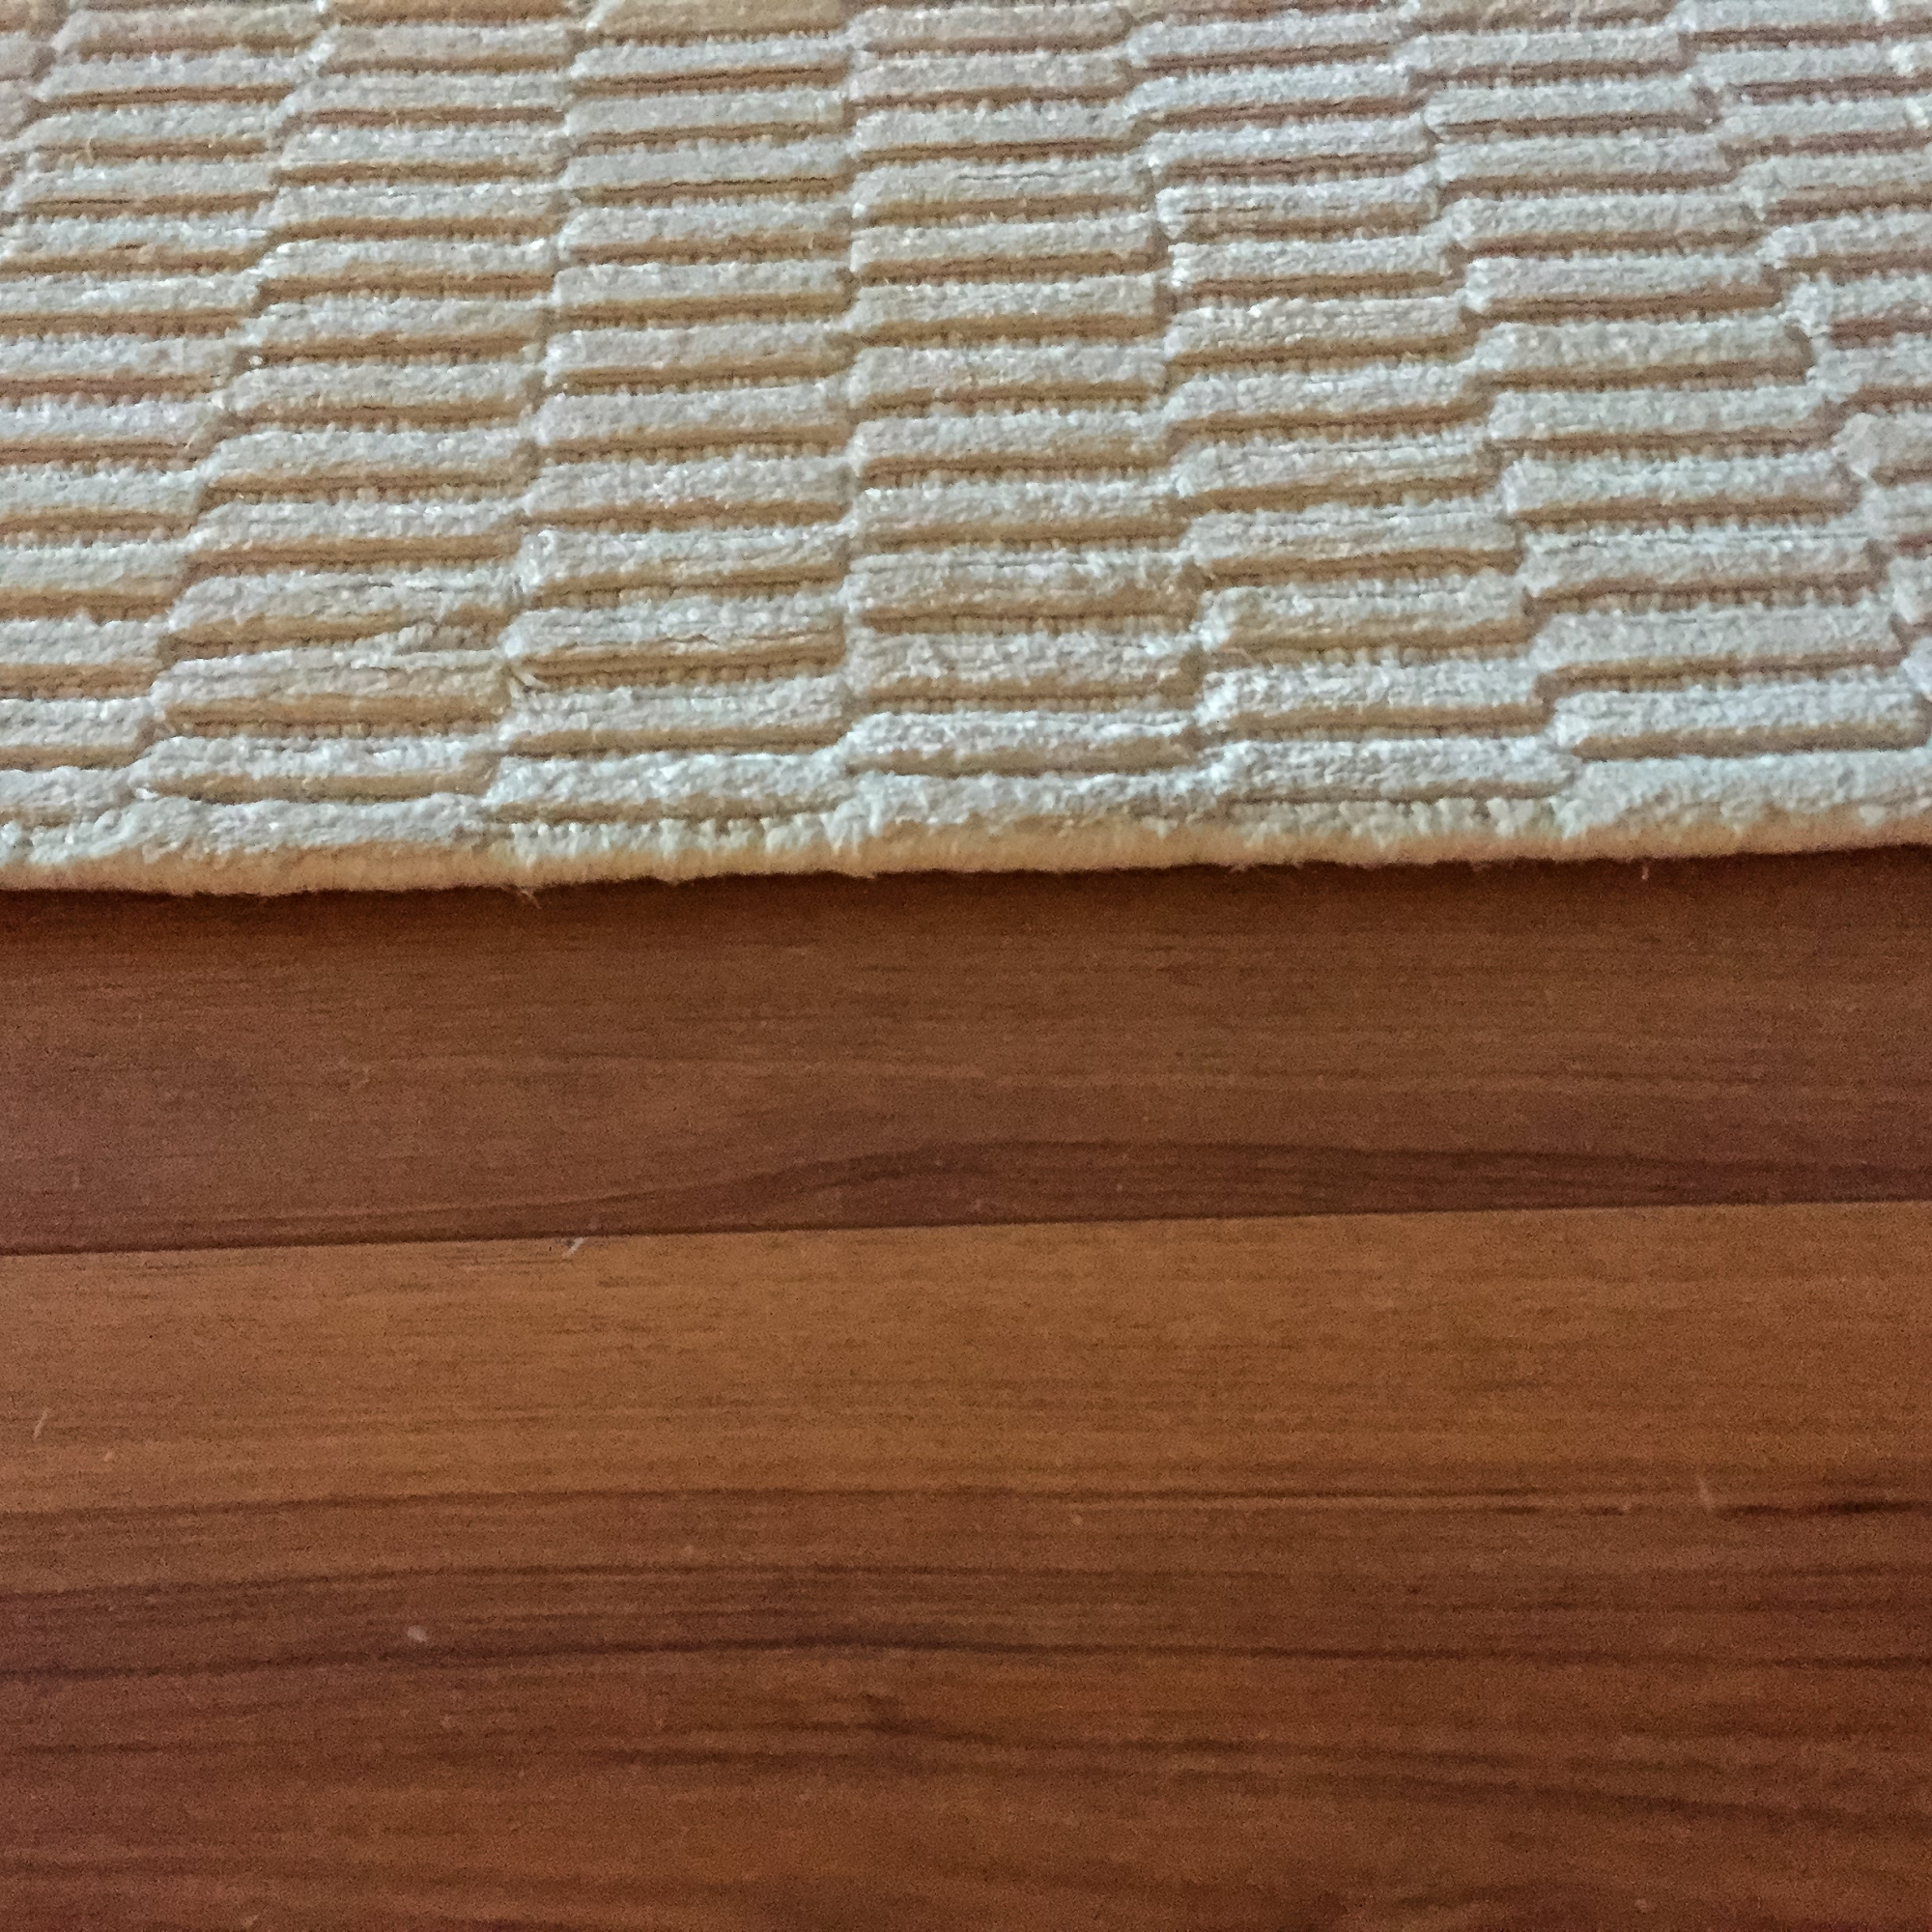 Addington White Handmade Rug-Area rug for living room, dining area, and bedroom